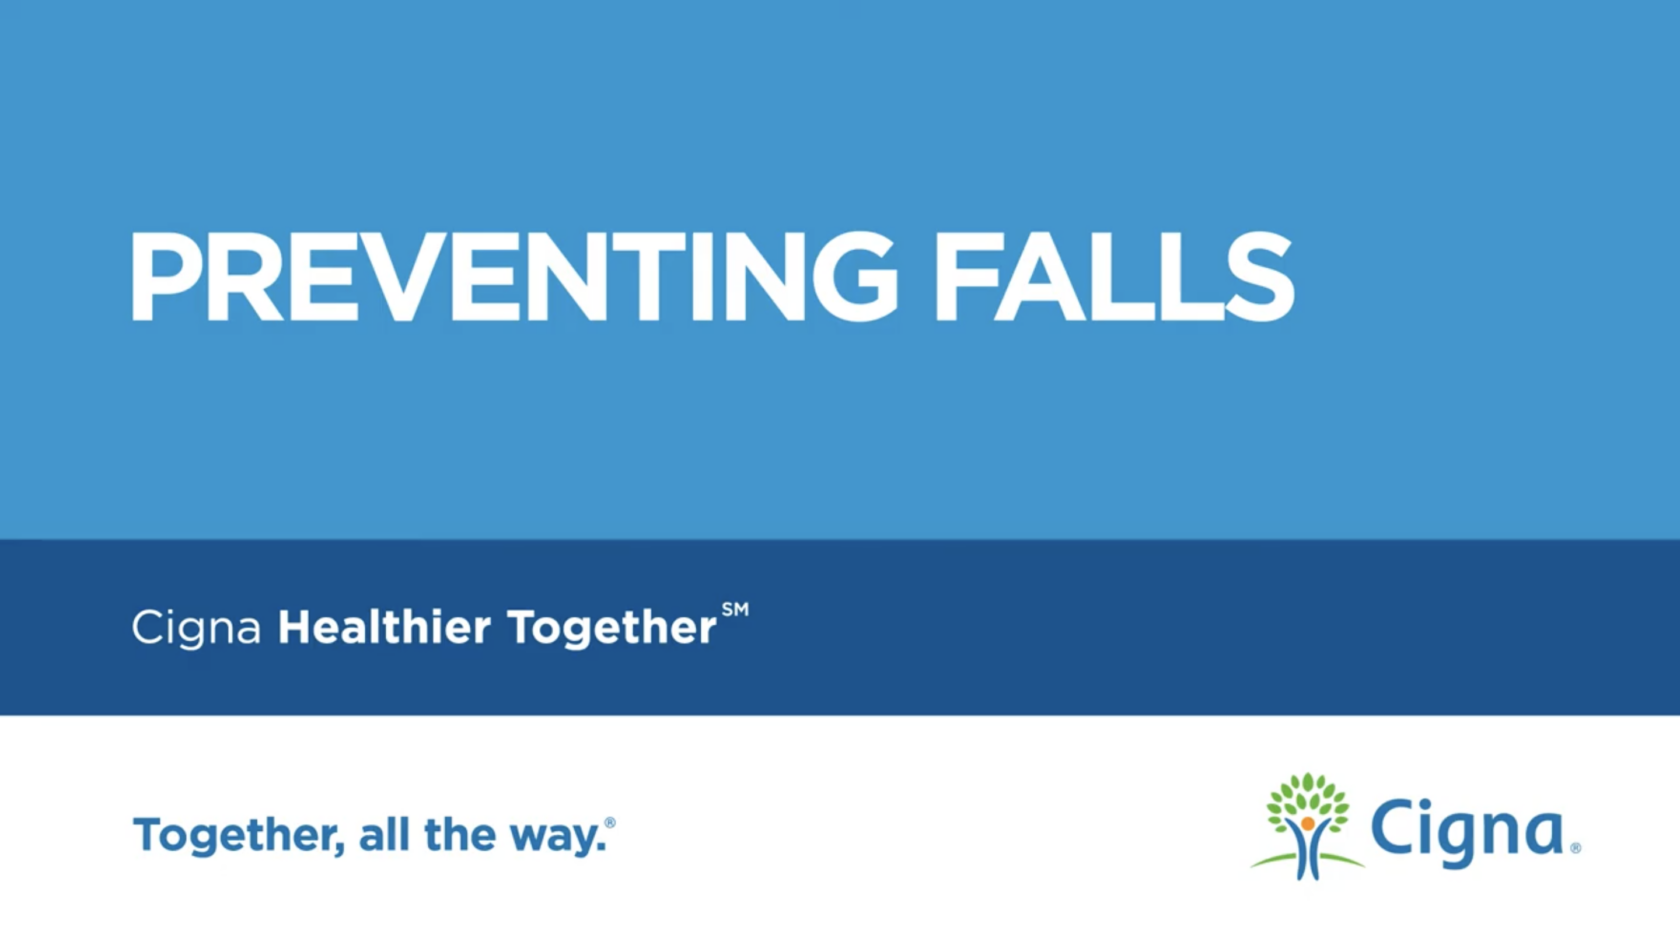 Video: Preventing Falls